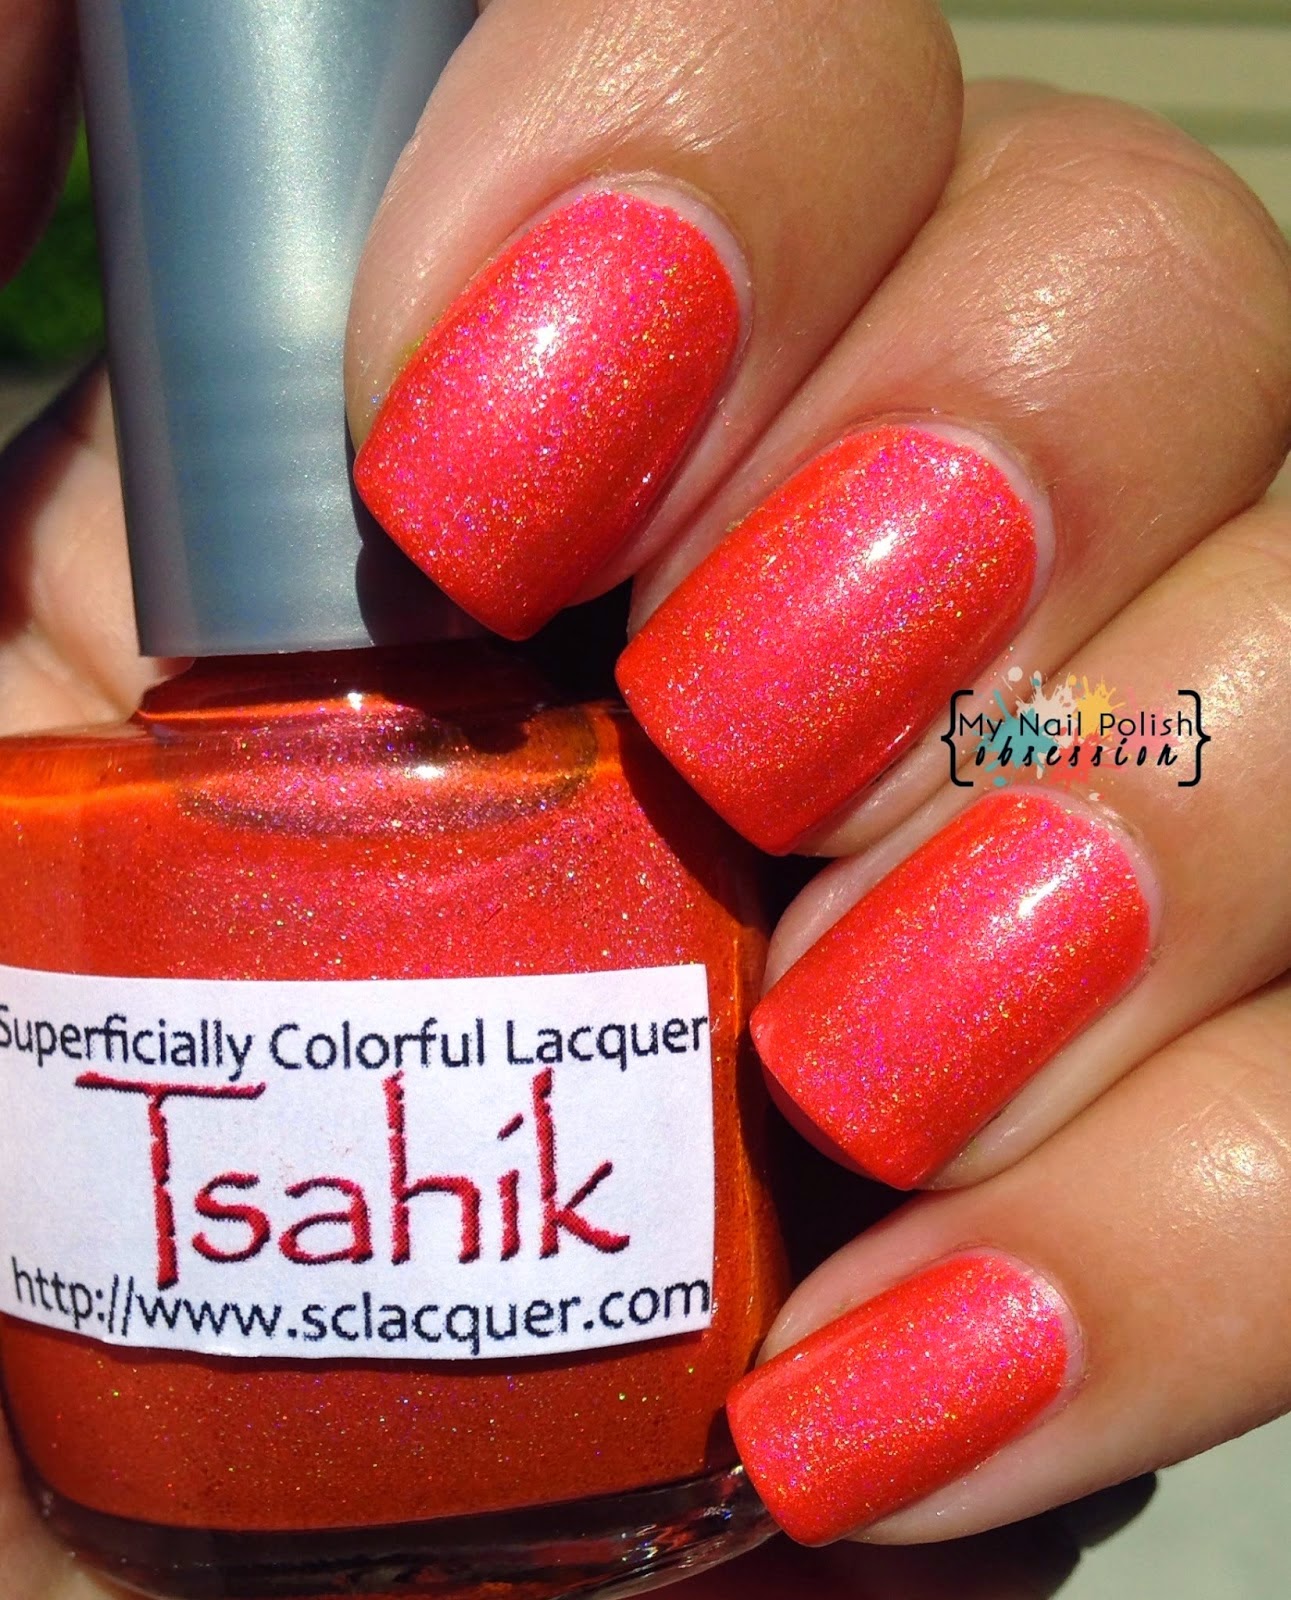 Superficially Colorful Lacquers Tsahik